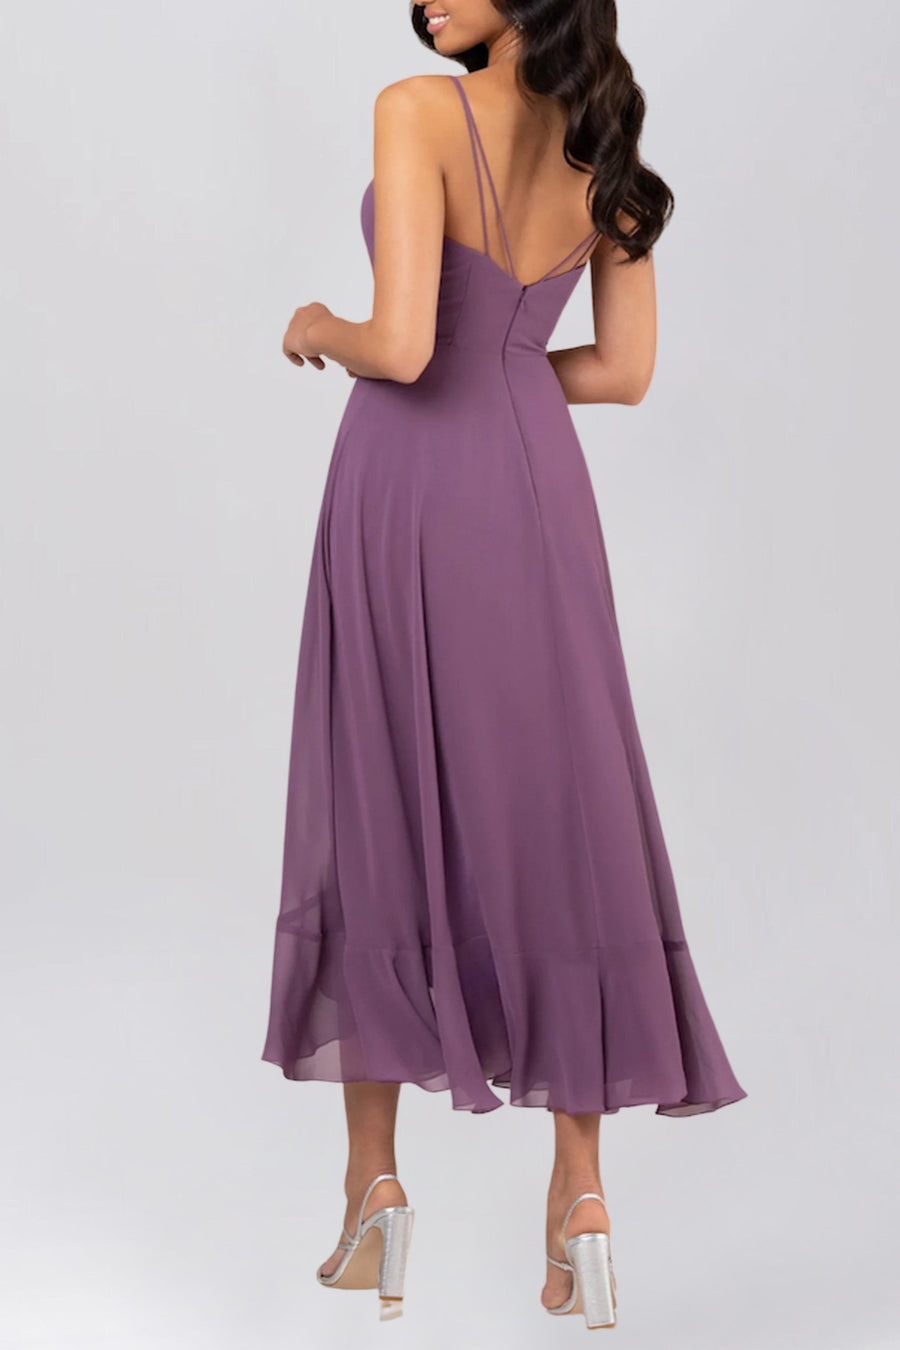 Stretch Satin Boat Neck Sleeveless Bridesmaid Dress| Plus Size | 60+ Colors